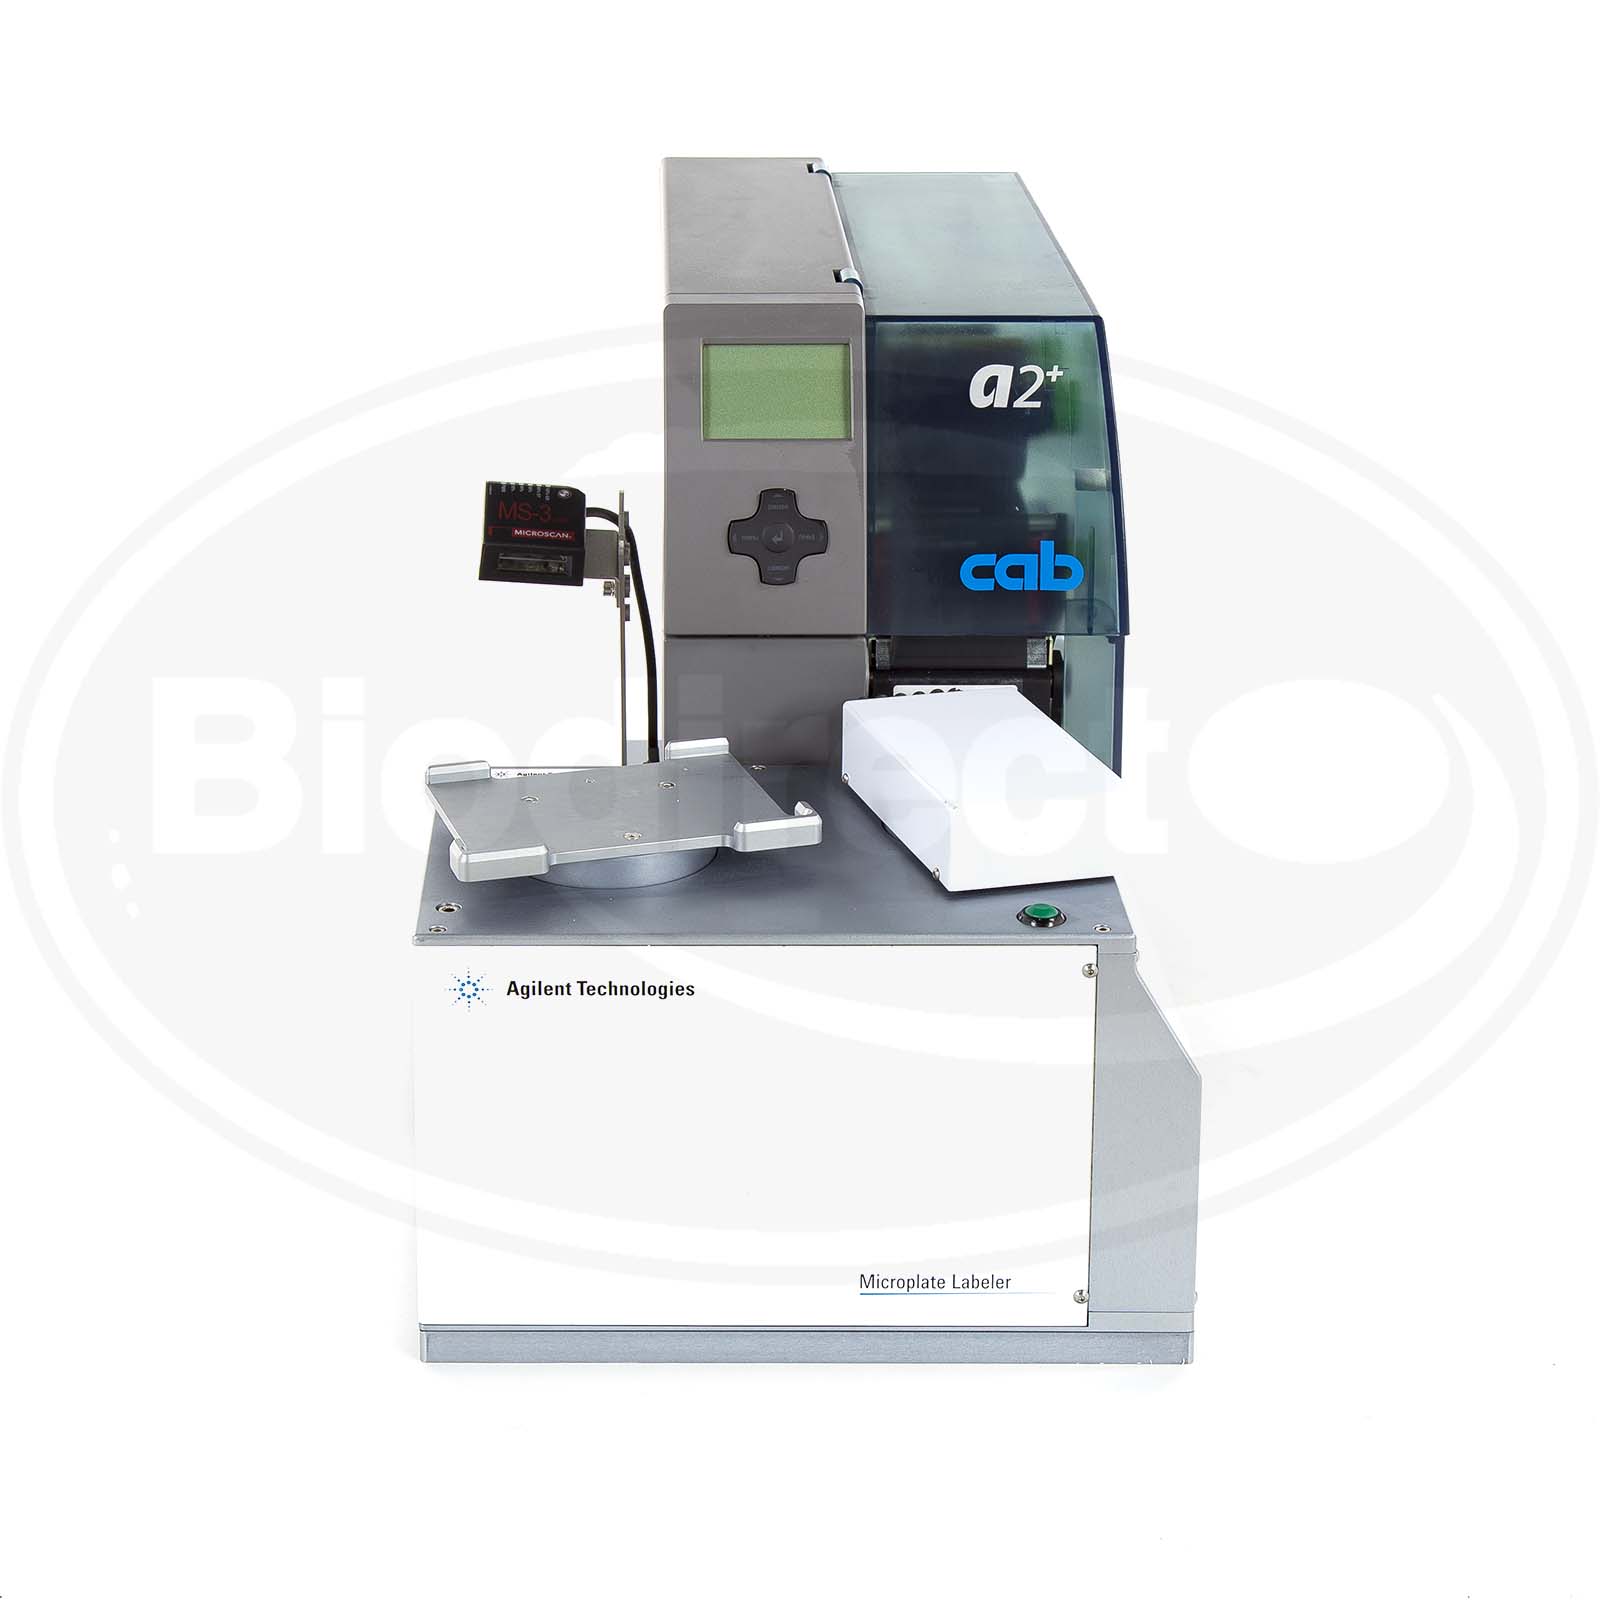 Agilent Technologies Microplate Labeler & Printer Microplate Labeler w/CAB Squix 2/600P Printer